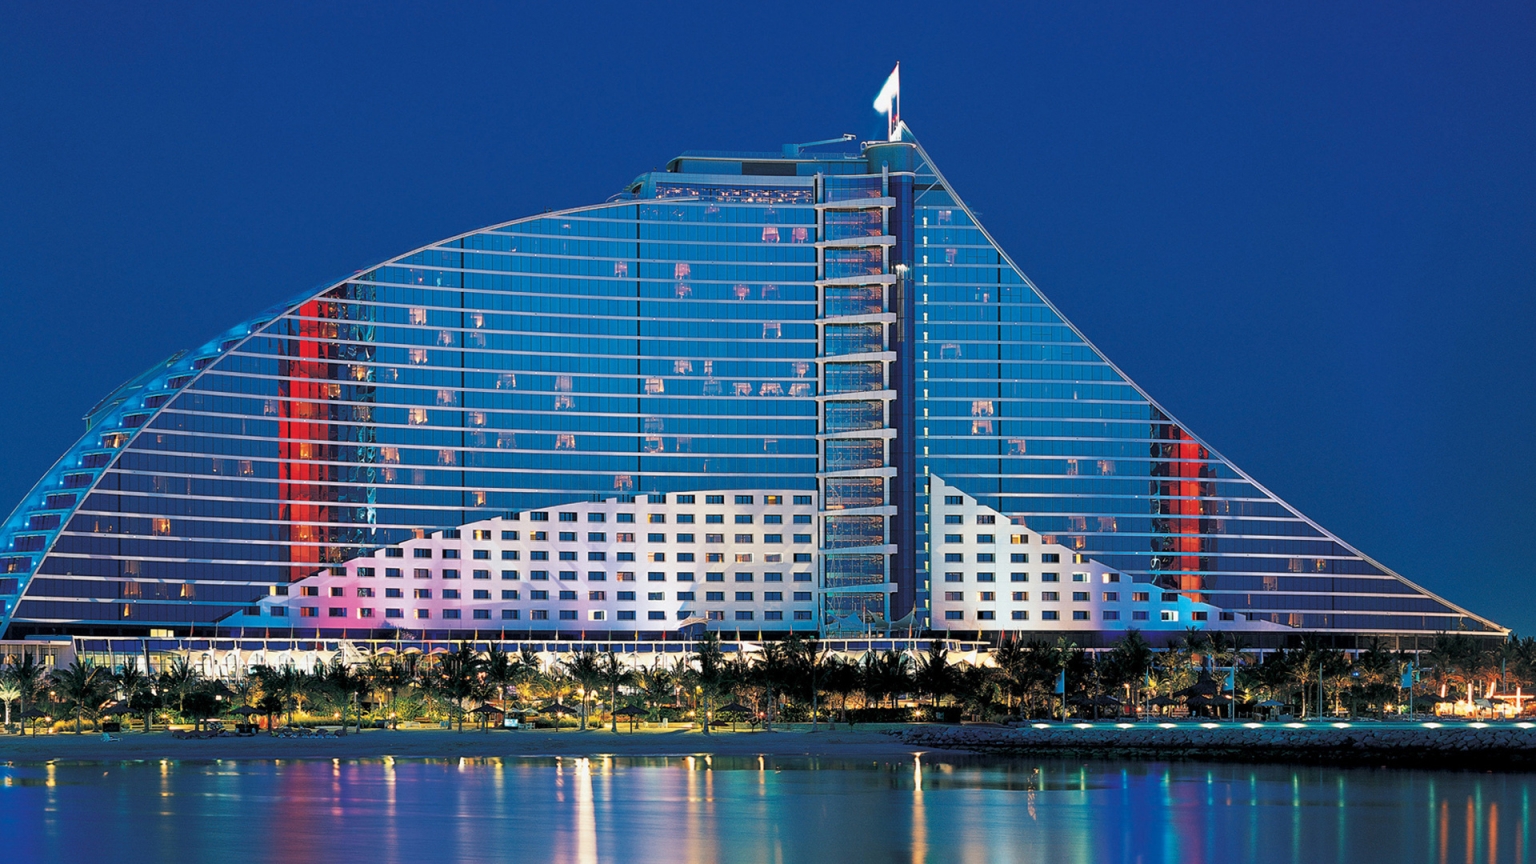 Jumeirah Beach Hotel Dubai for 1536 x 864 HDTV resolution